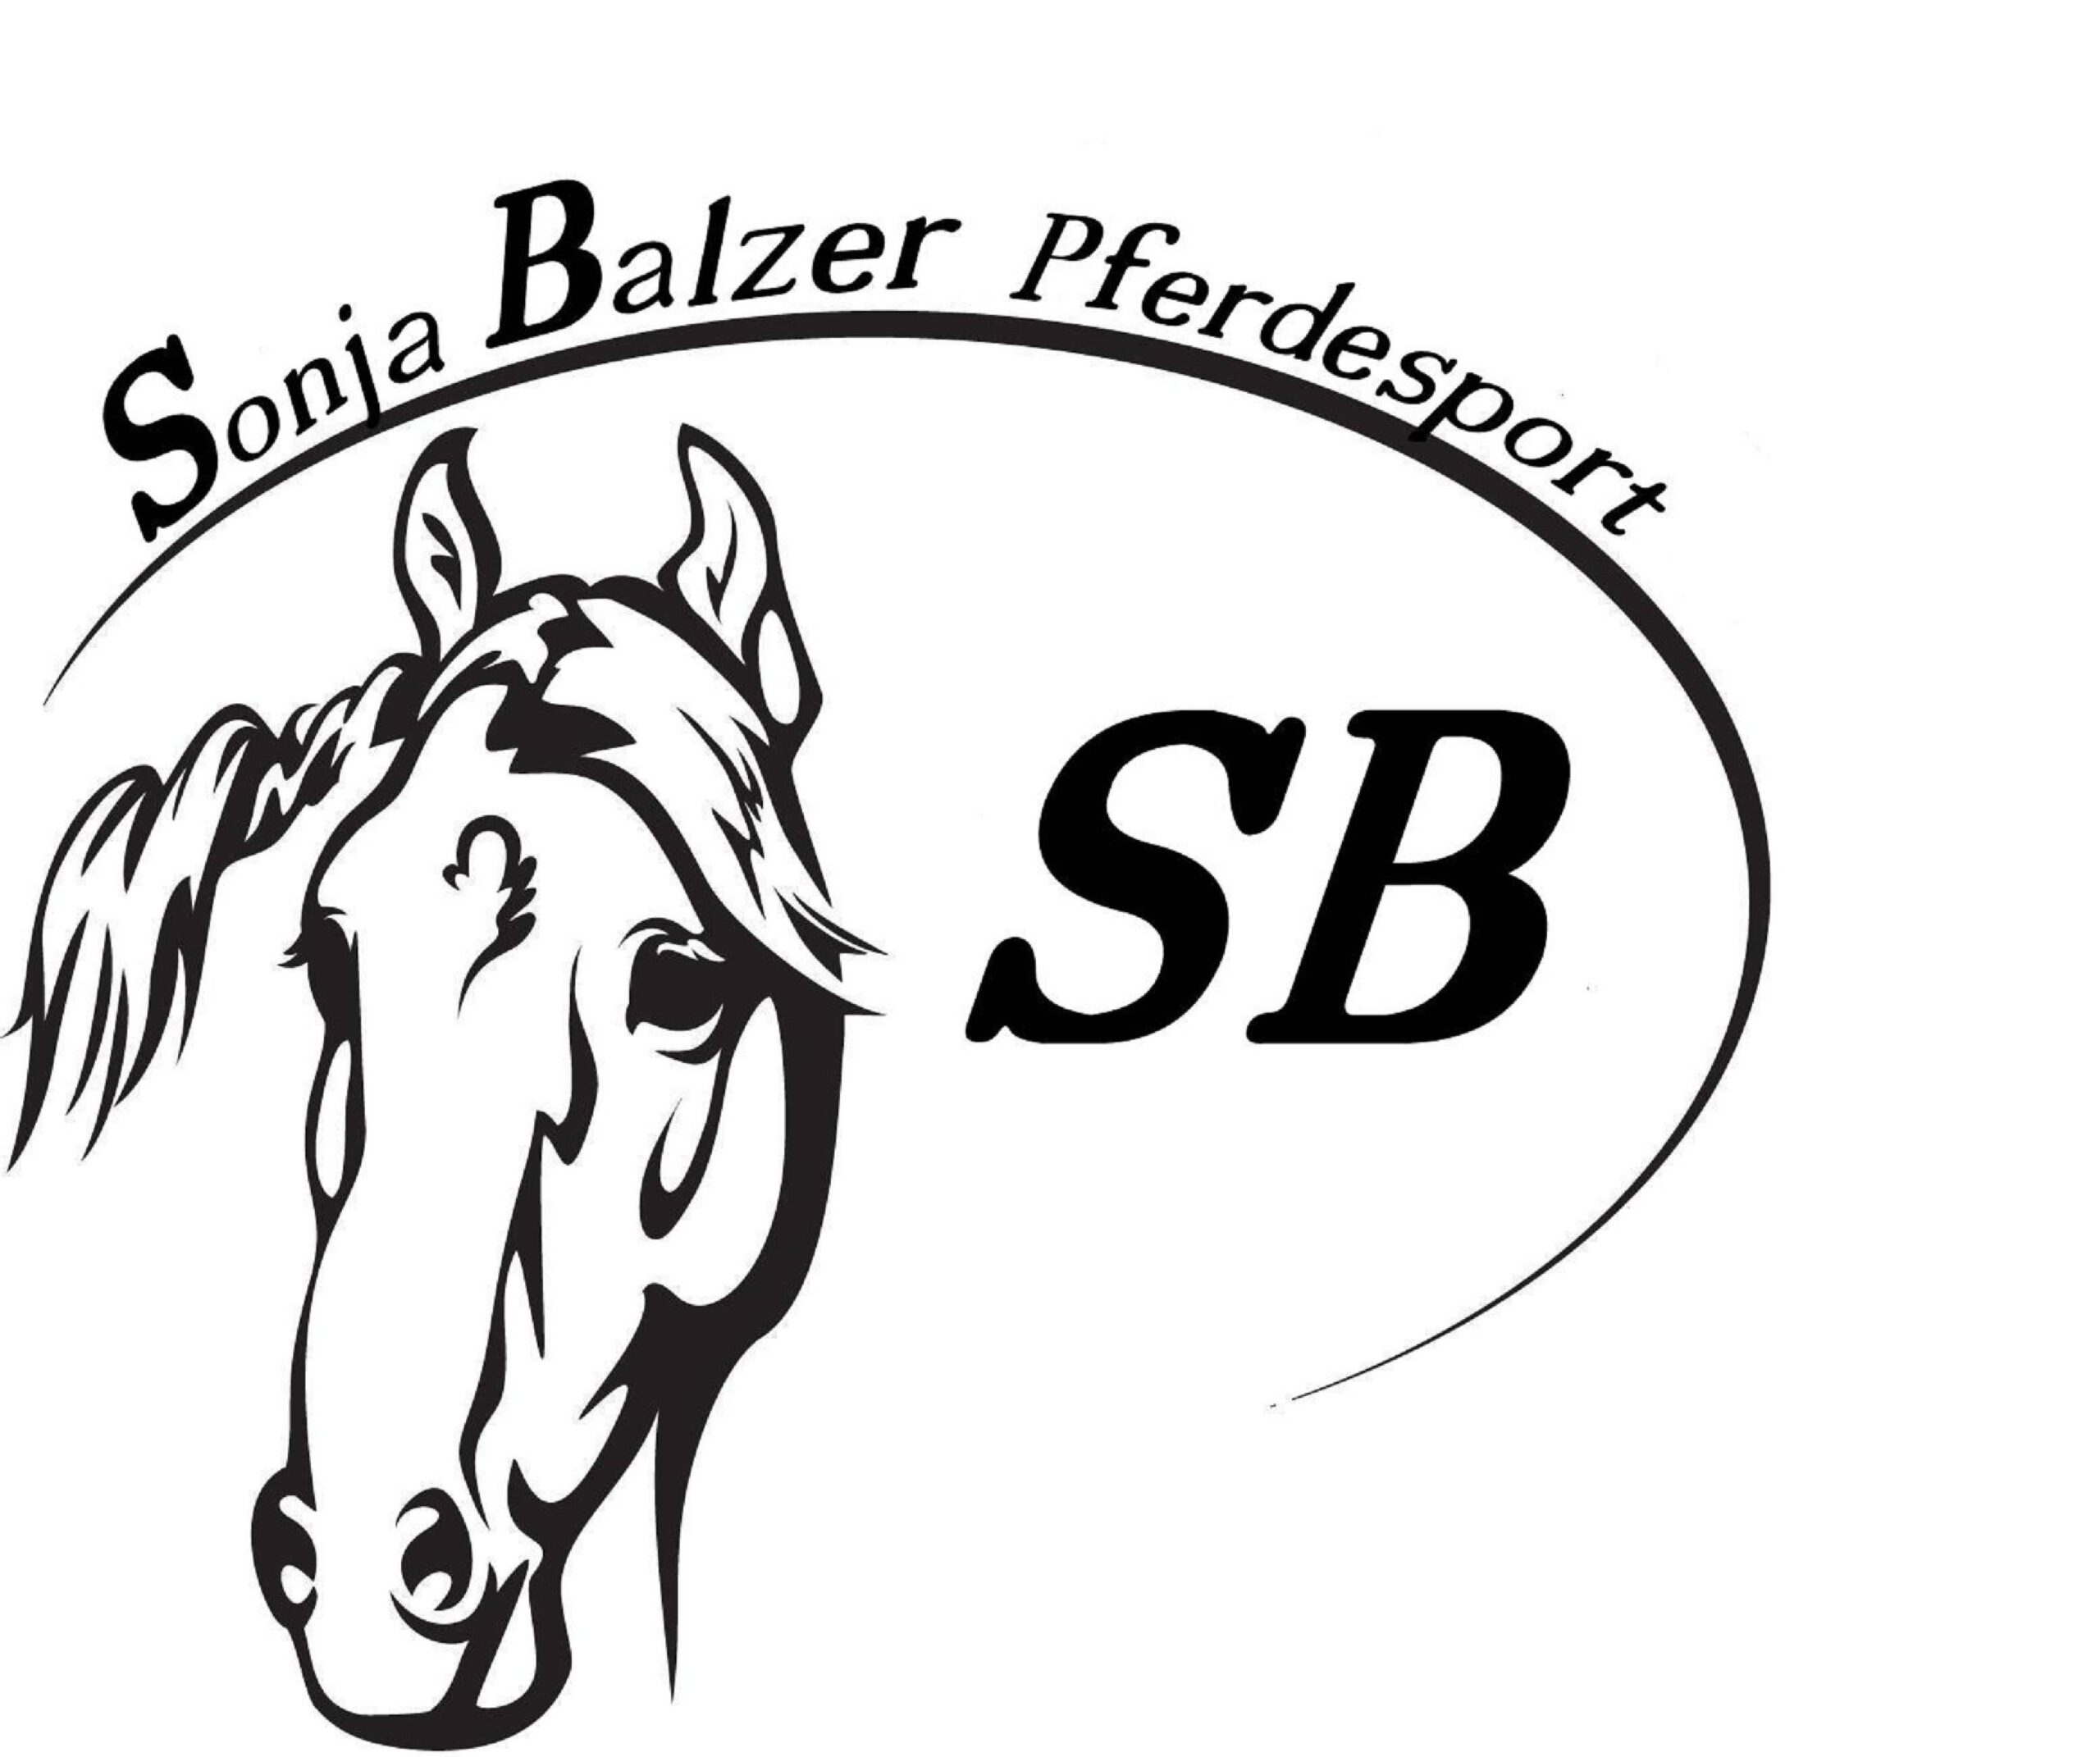 Sonja Balzer Pferdesport